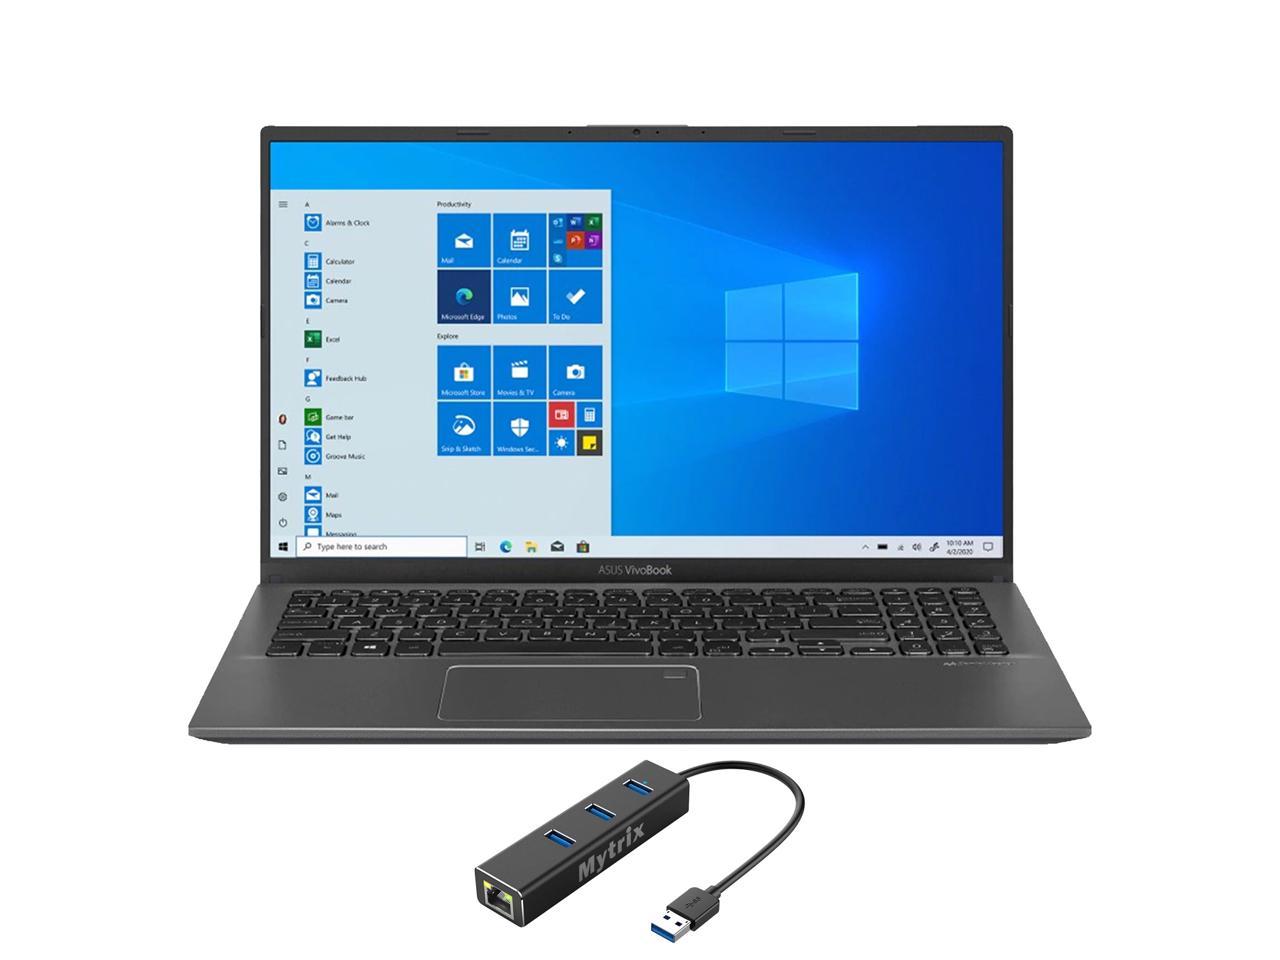 ASUS VivoBook 15.6" FHD Touchscreen Laptop, 1080p NanoEdge, Inetl Core